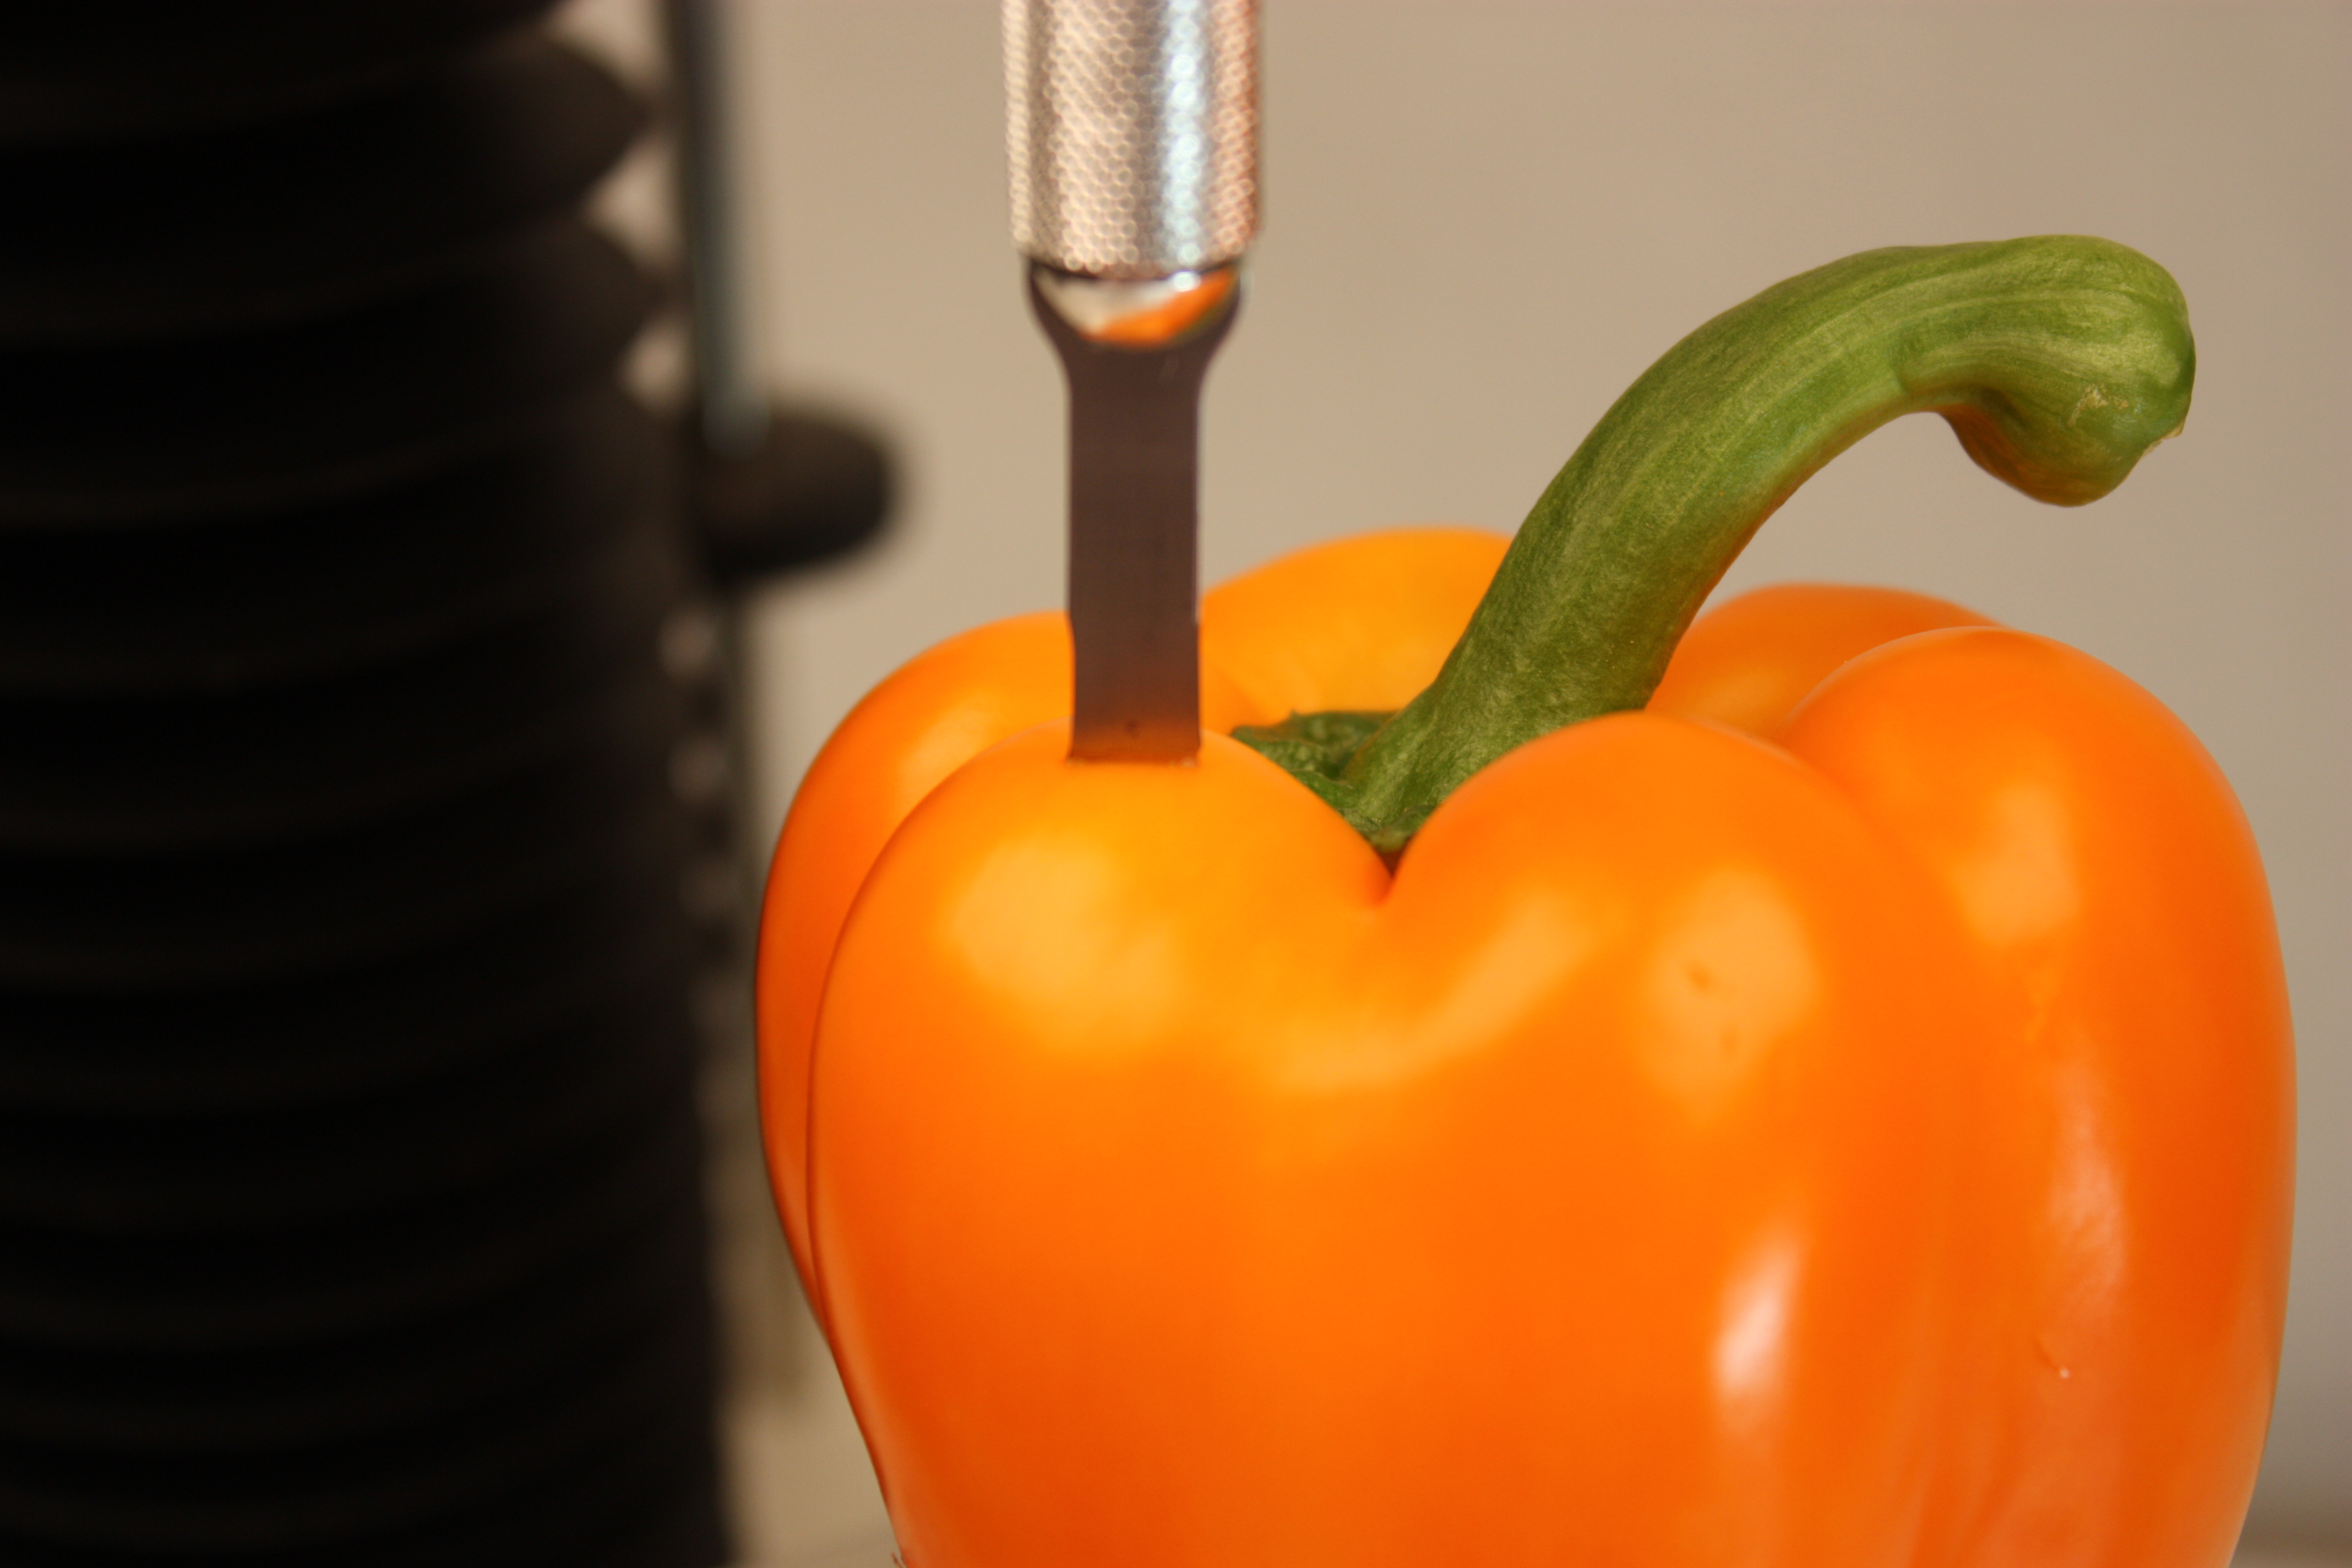 Testing pepper